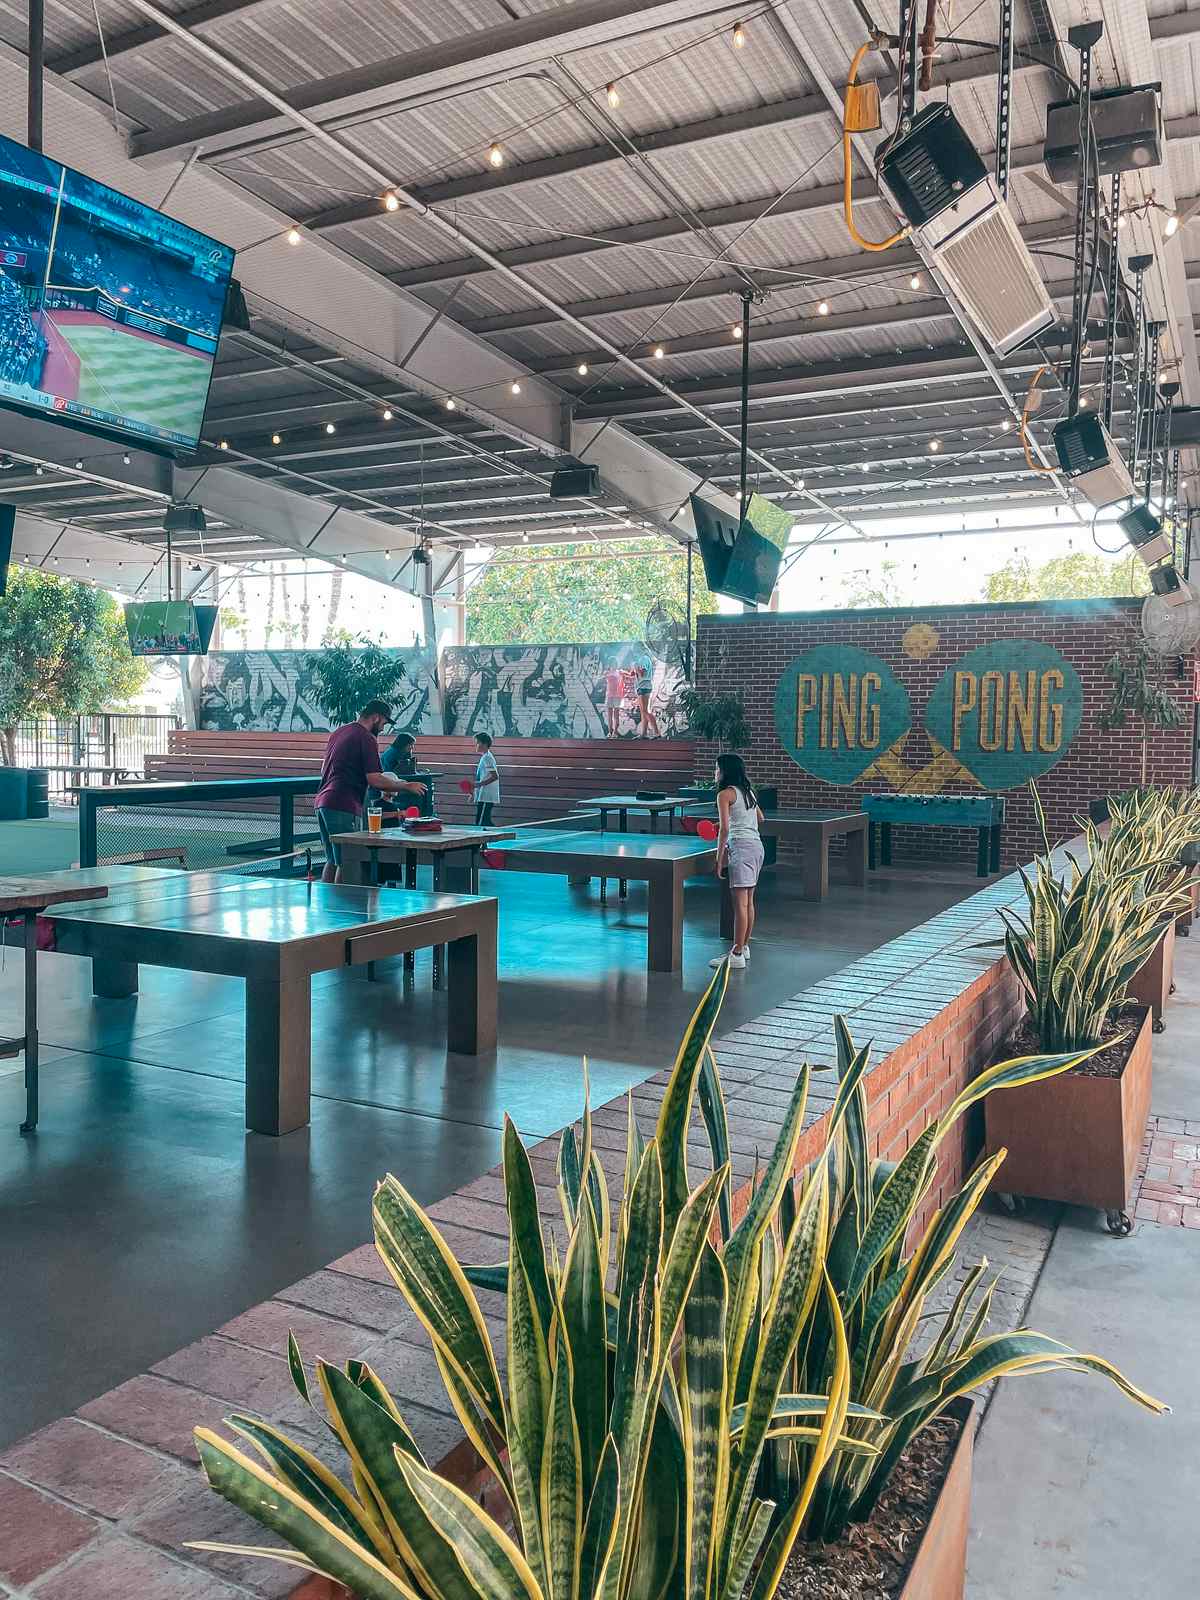 Ping Pong tables at Culinary Dropout in Arizona